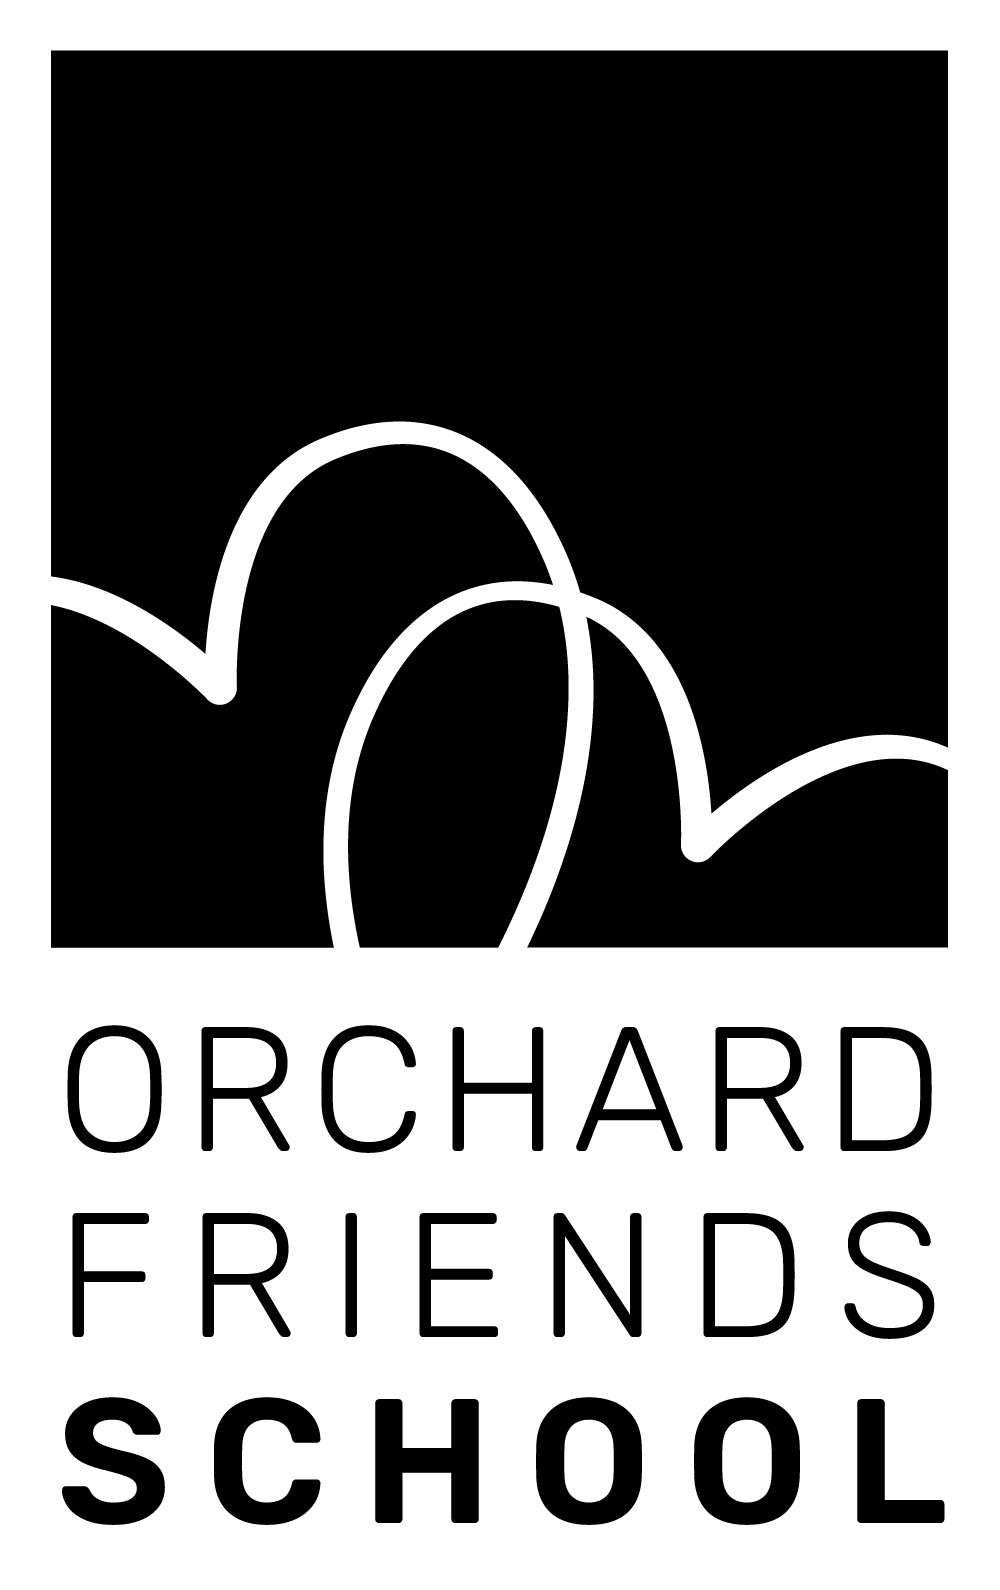 Orchard Friends School